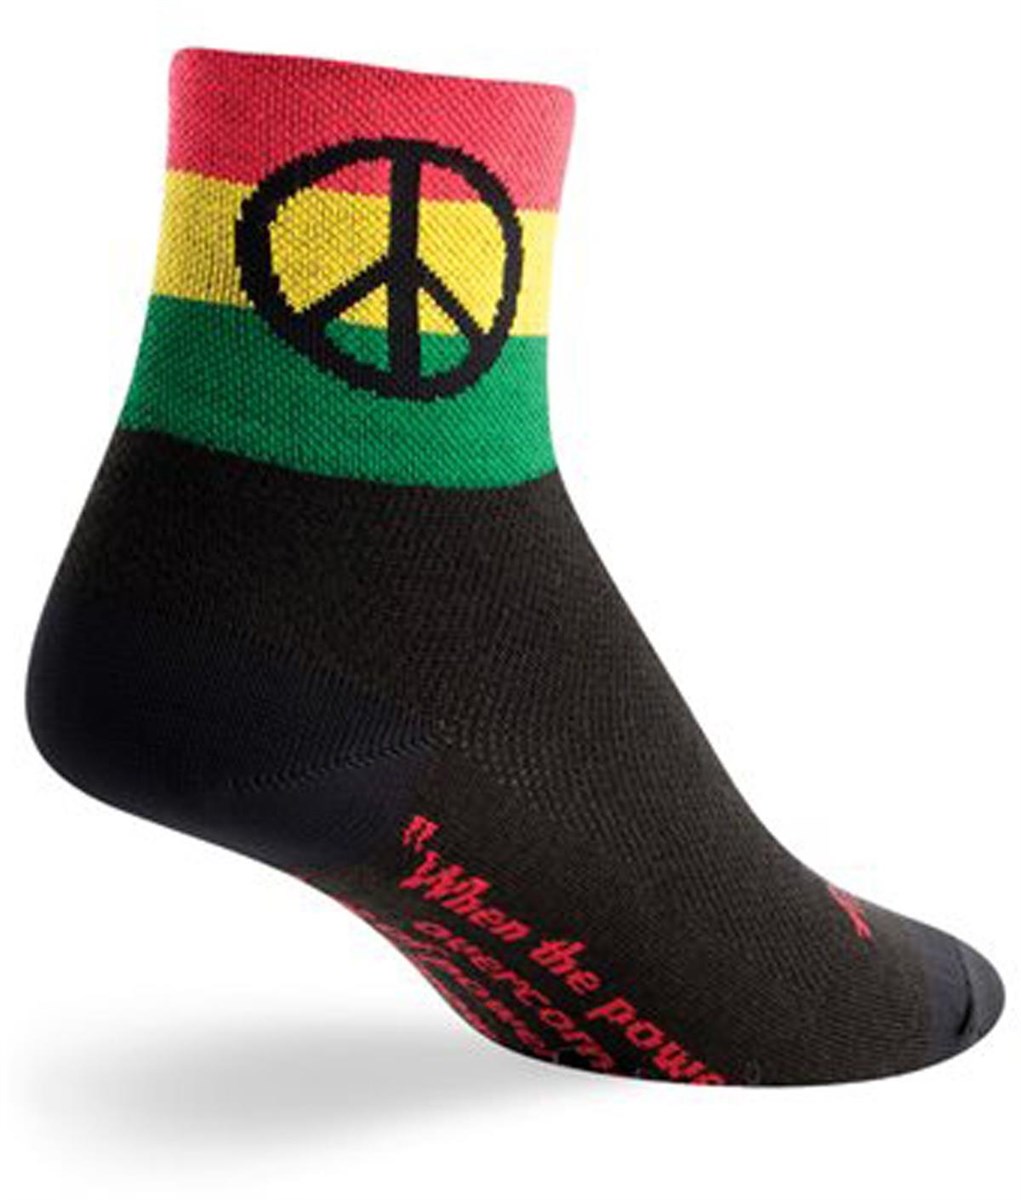 SockGuy Peace 3 Socks